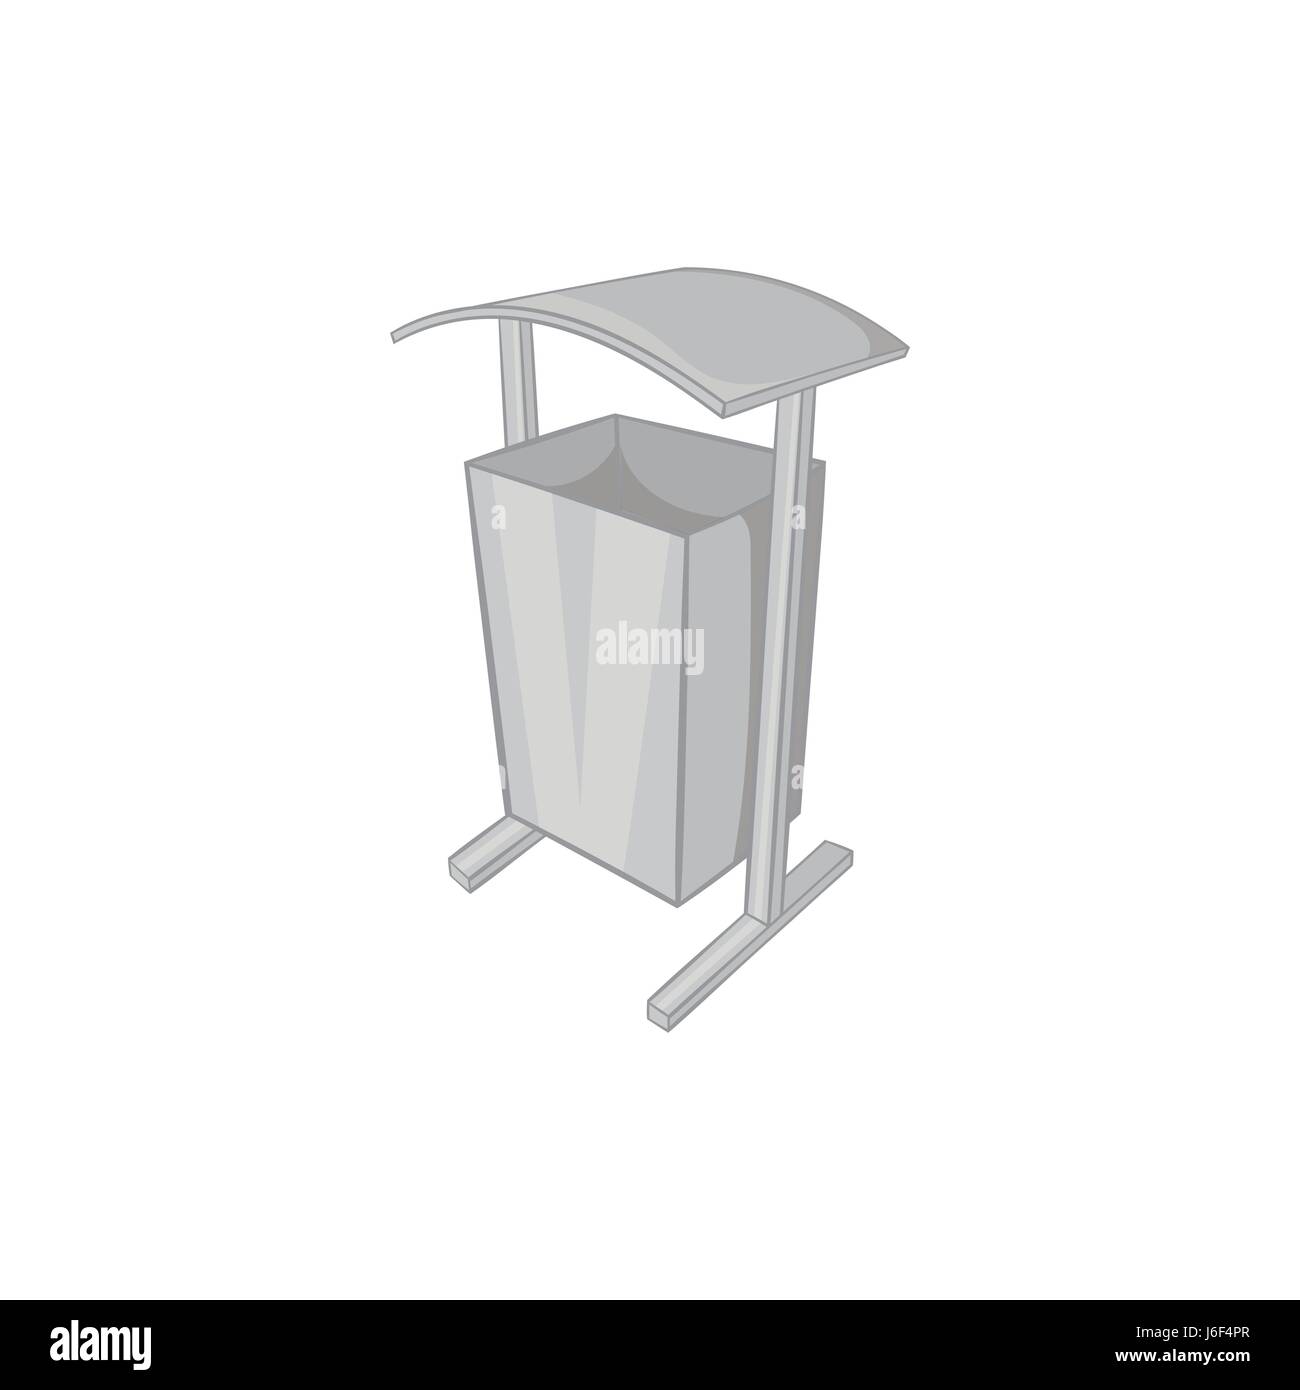 Dustbin for public spaces icon, monochrome style Stock Vector